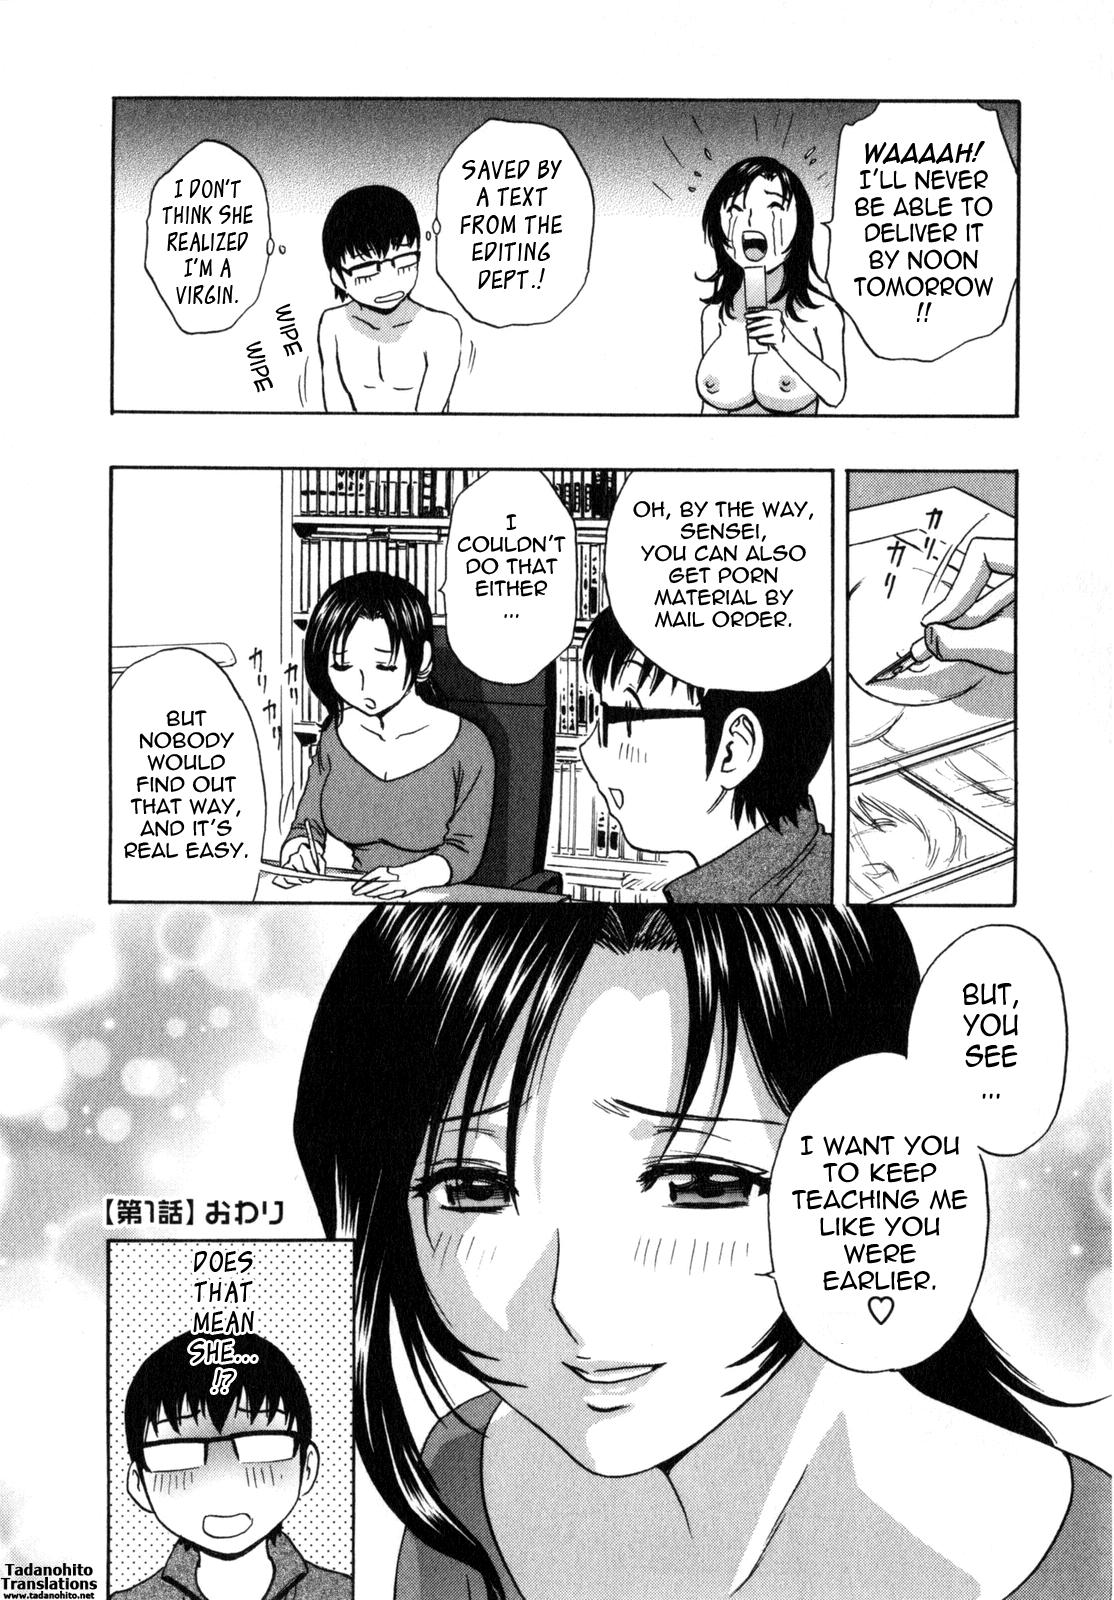 [Hidemaru] Life with Married Women Just Like a Manga 1 - Ch. 1-4 [English] {Tadanohito} 24